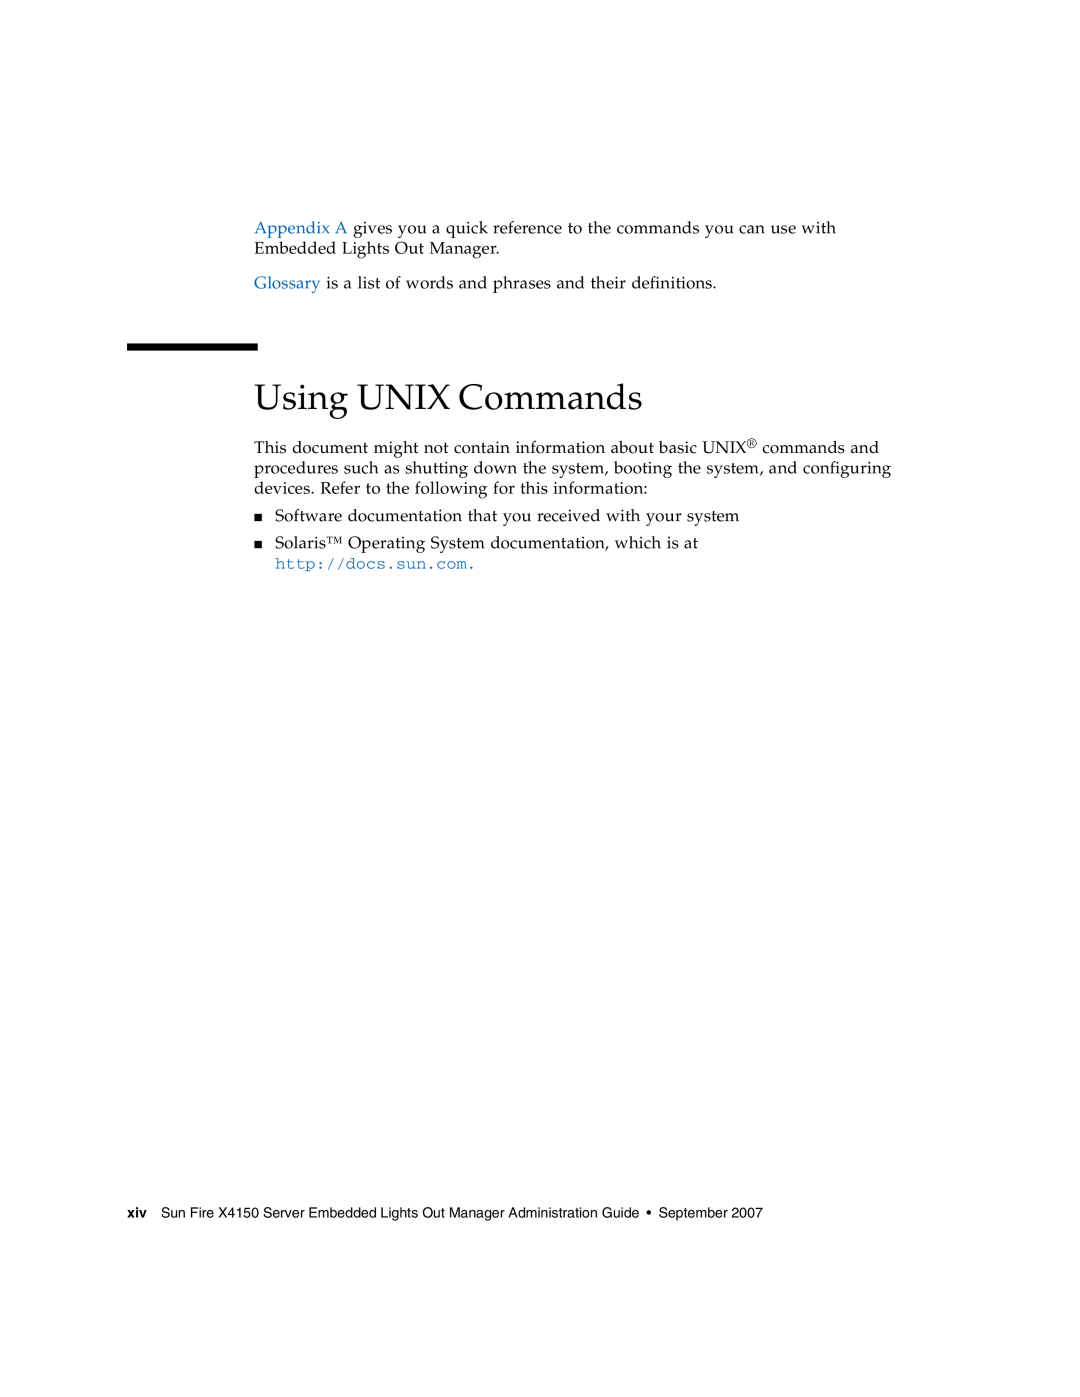 Sun Microsystems X4150 manual Using UNIX Commands 